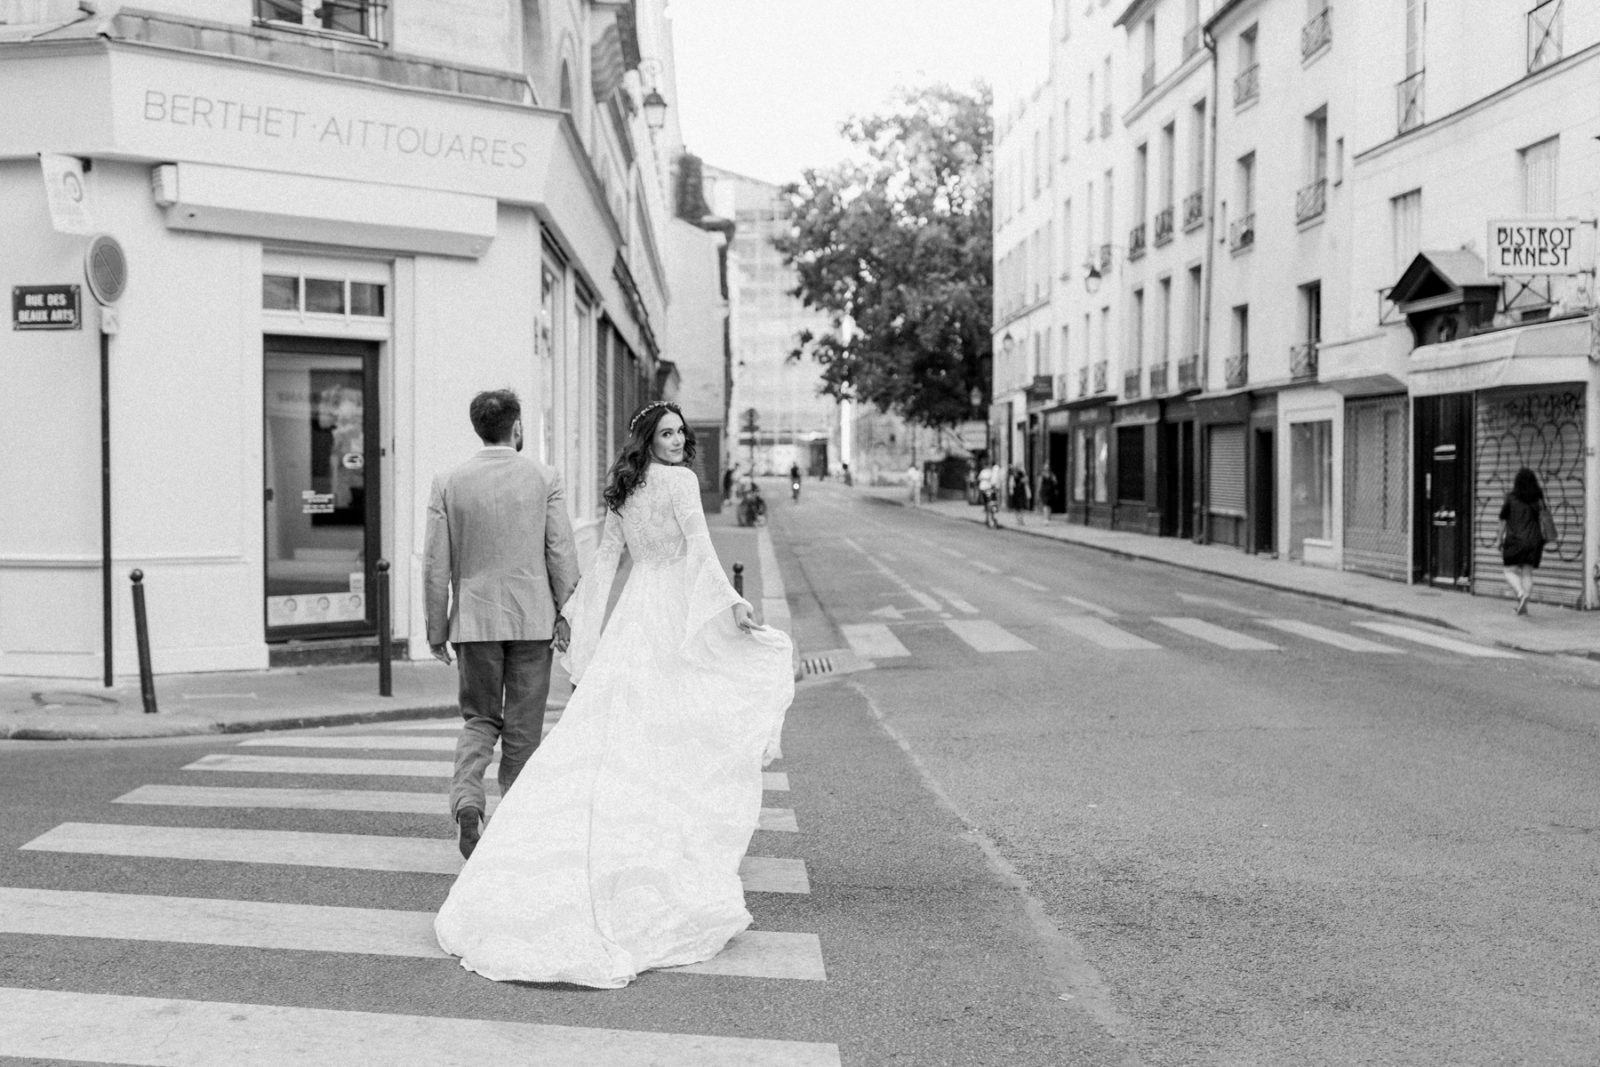 Paris Wedding Photography | Paris Wedding Photographer | France Wedding Photos | Paris Film Photographer | Molly Carr Photography | Rue de Seine Wild Harlow Wedding Gown | Saint Germain de Pres | Samantha Smart Wedding